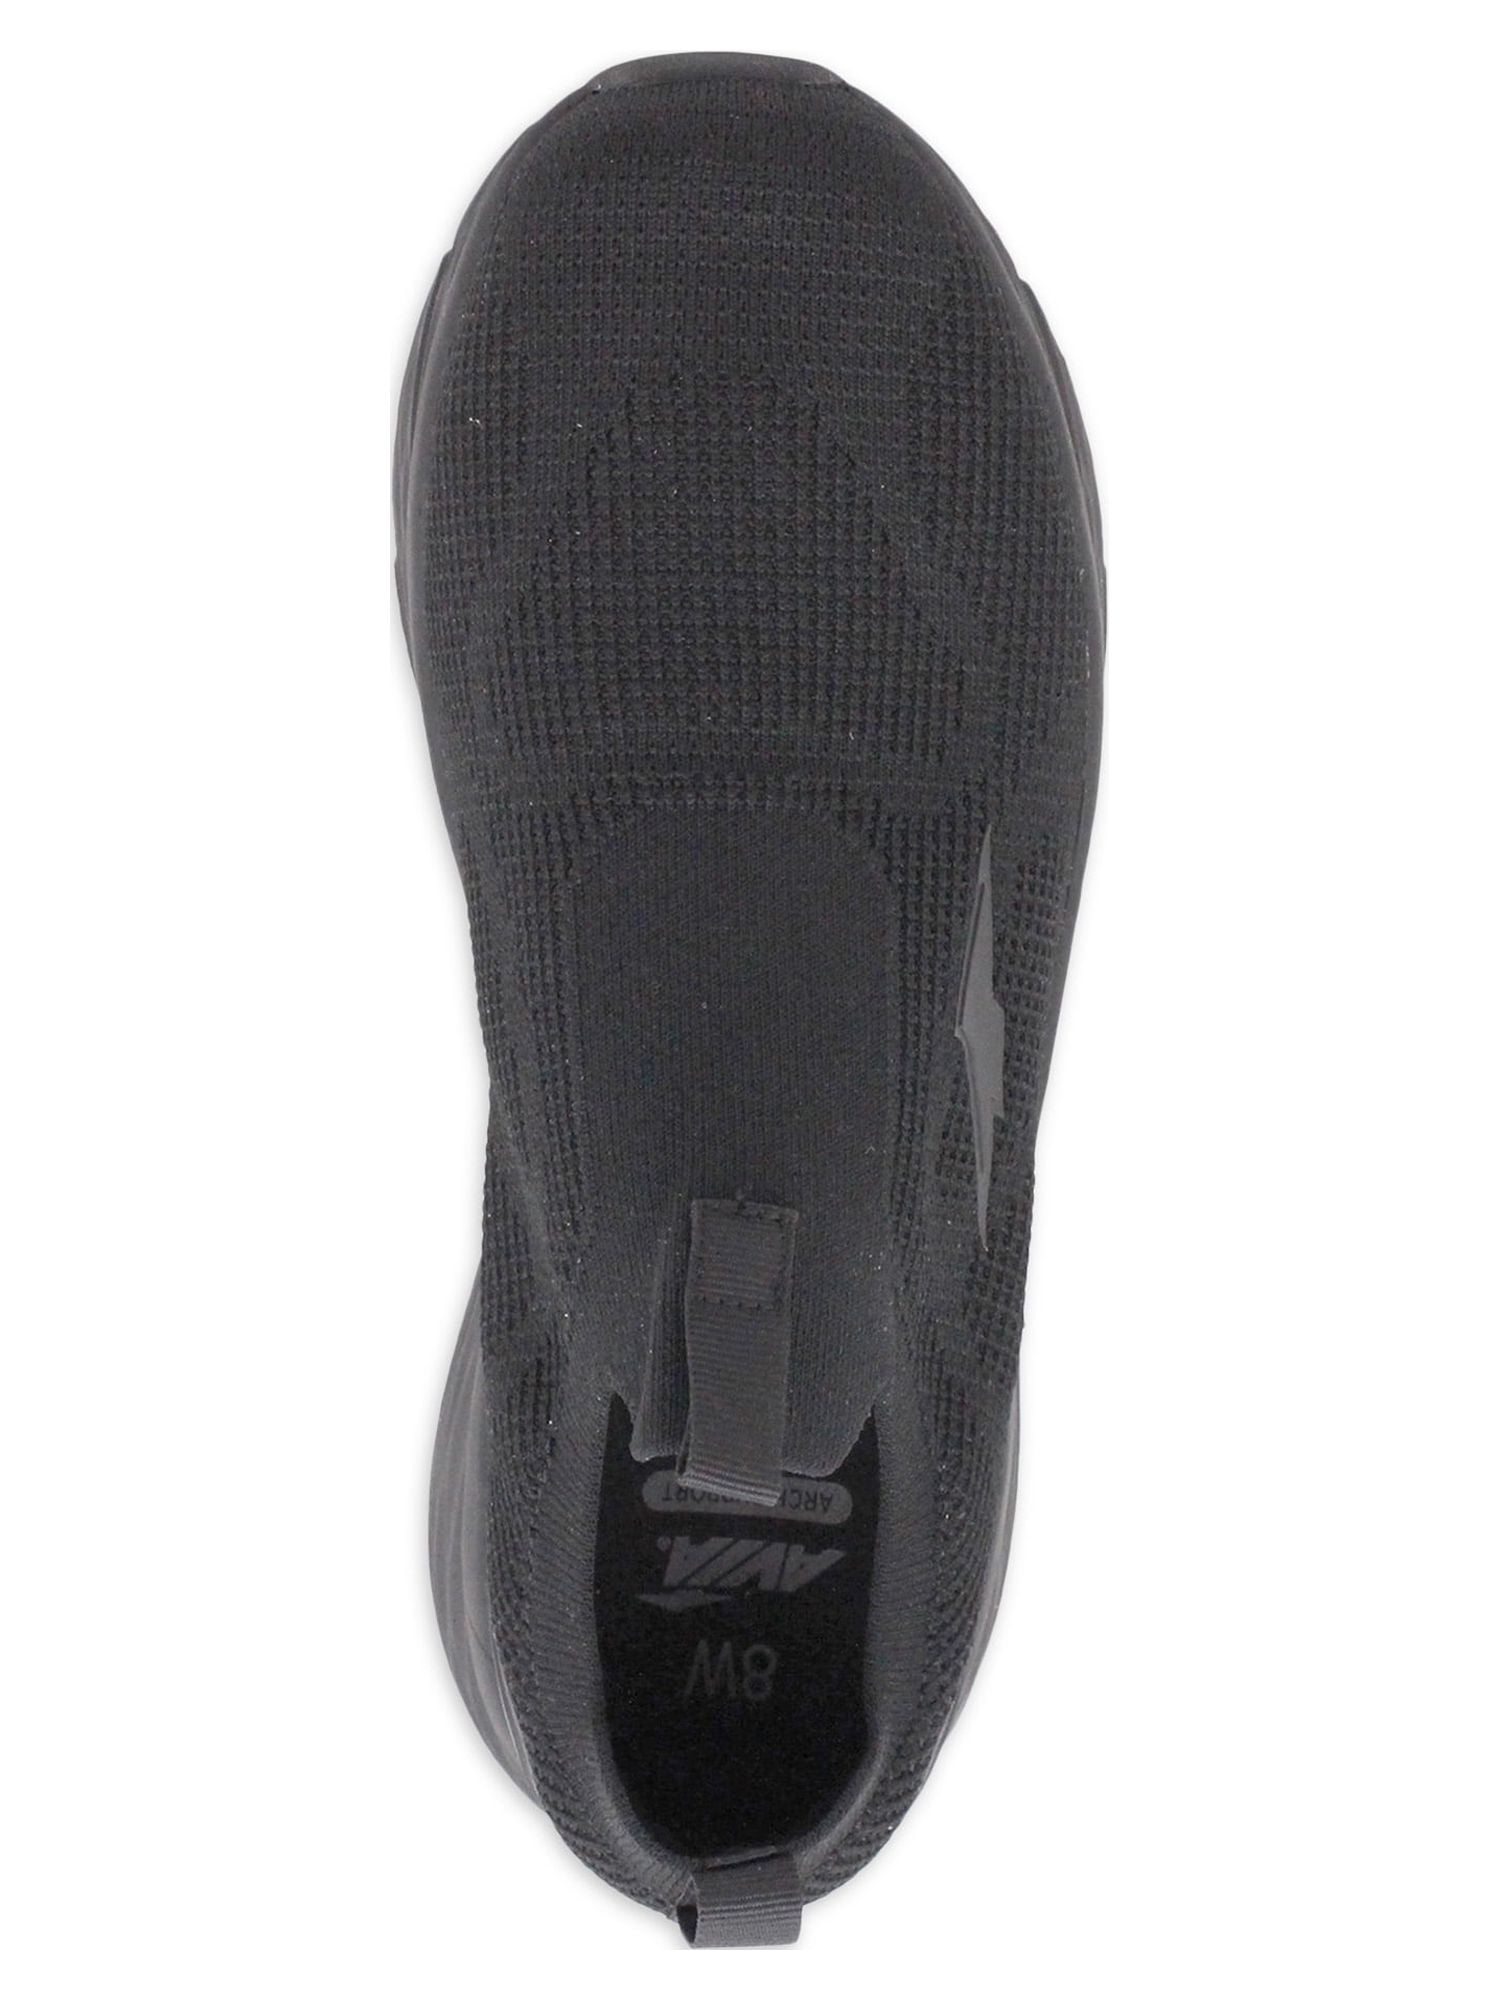 Avia Women's Slip-on Athletic Sneaker, Wide Width Available